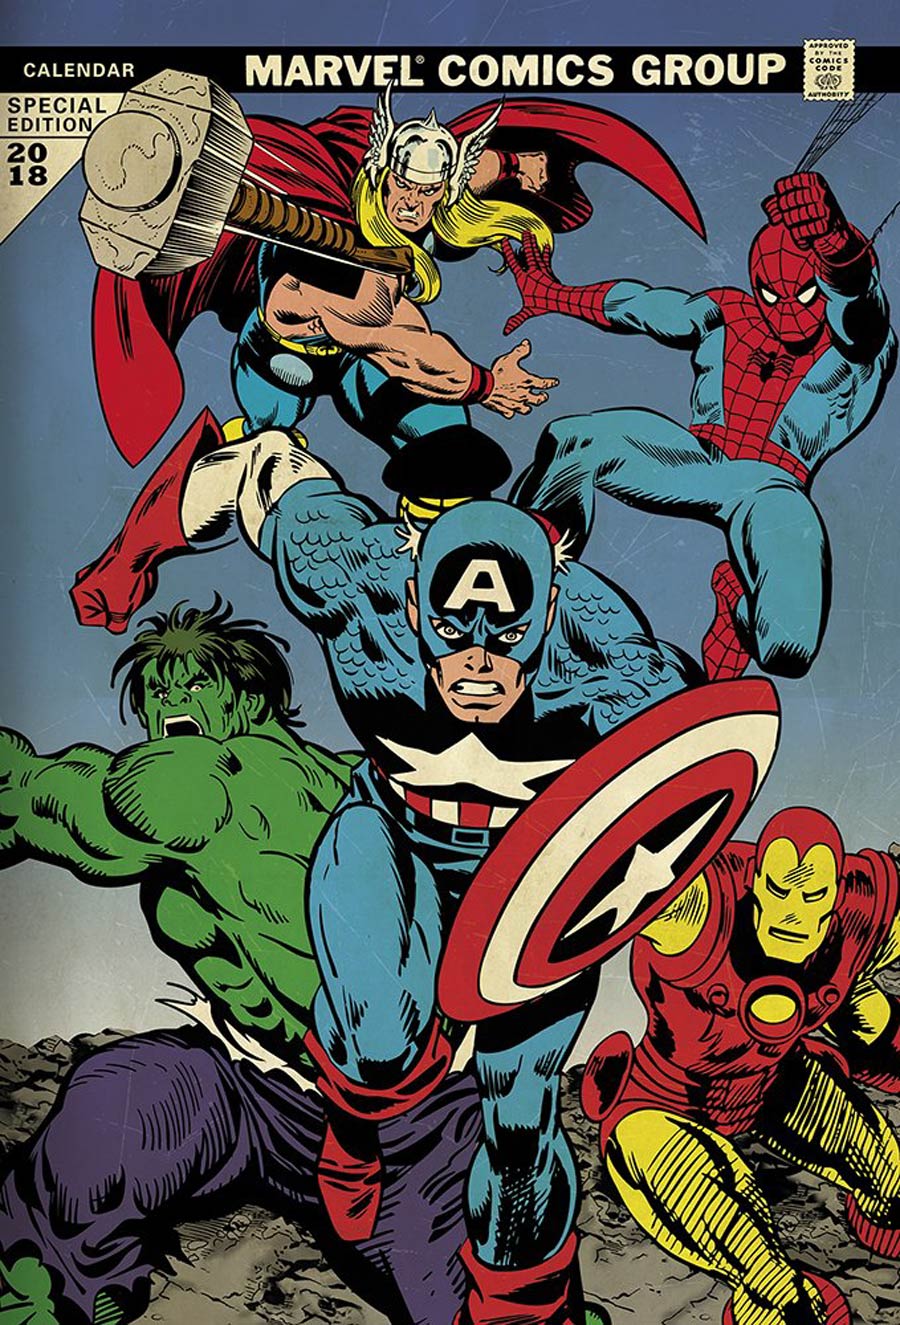 Marvel Avengers 2018 9x14-inch Wall Calendar